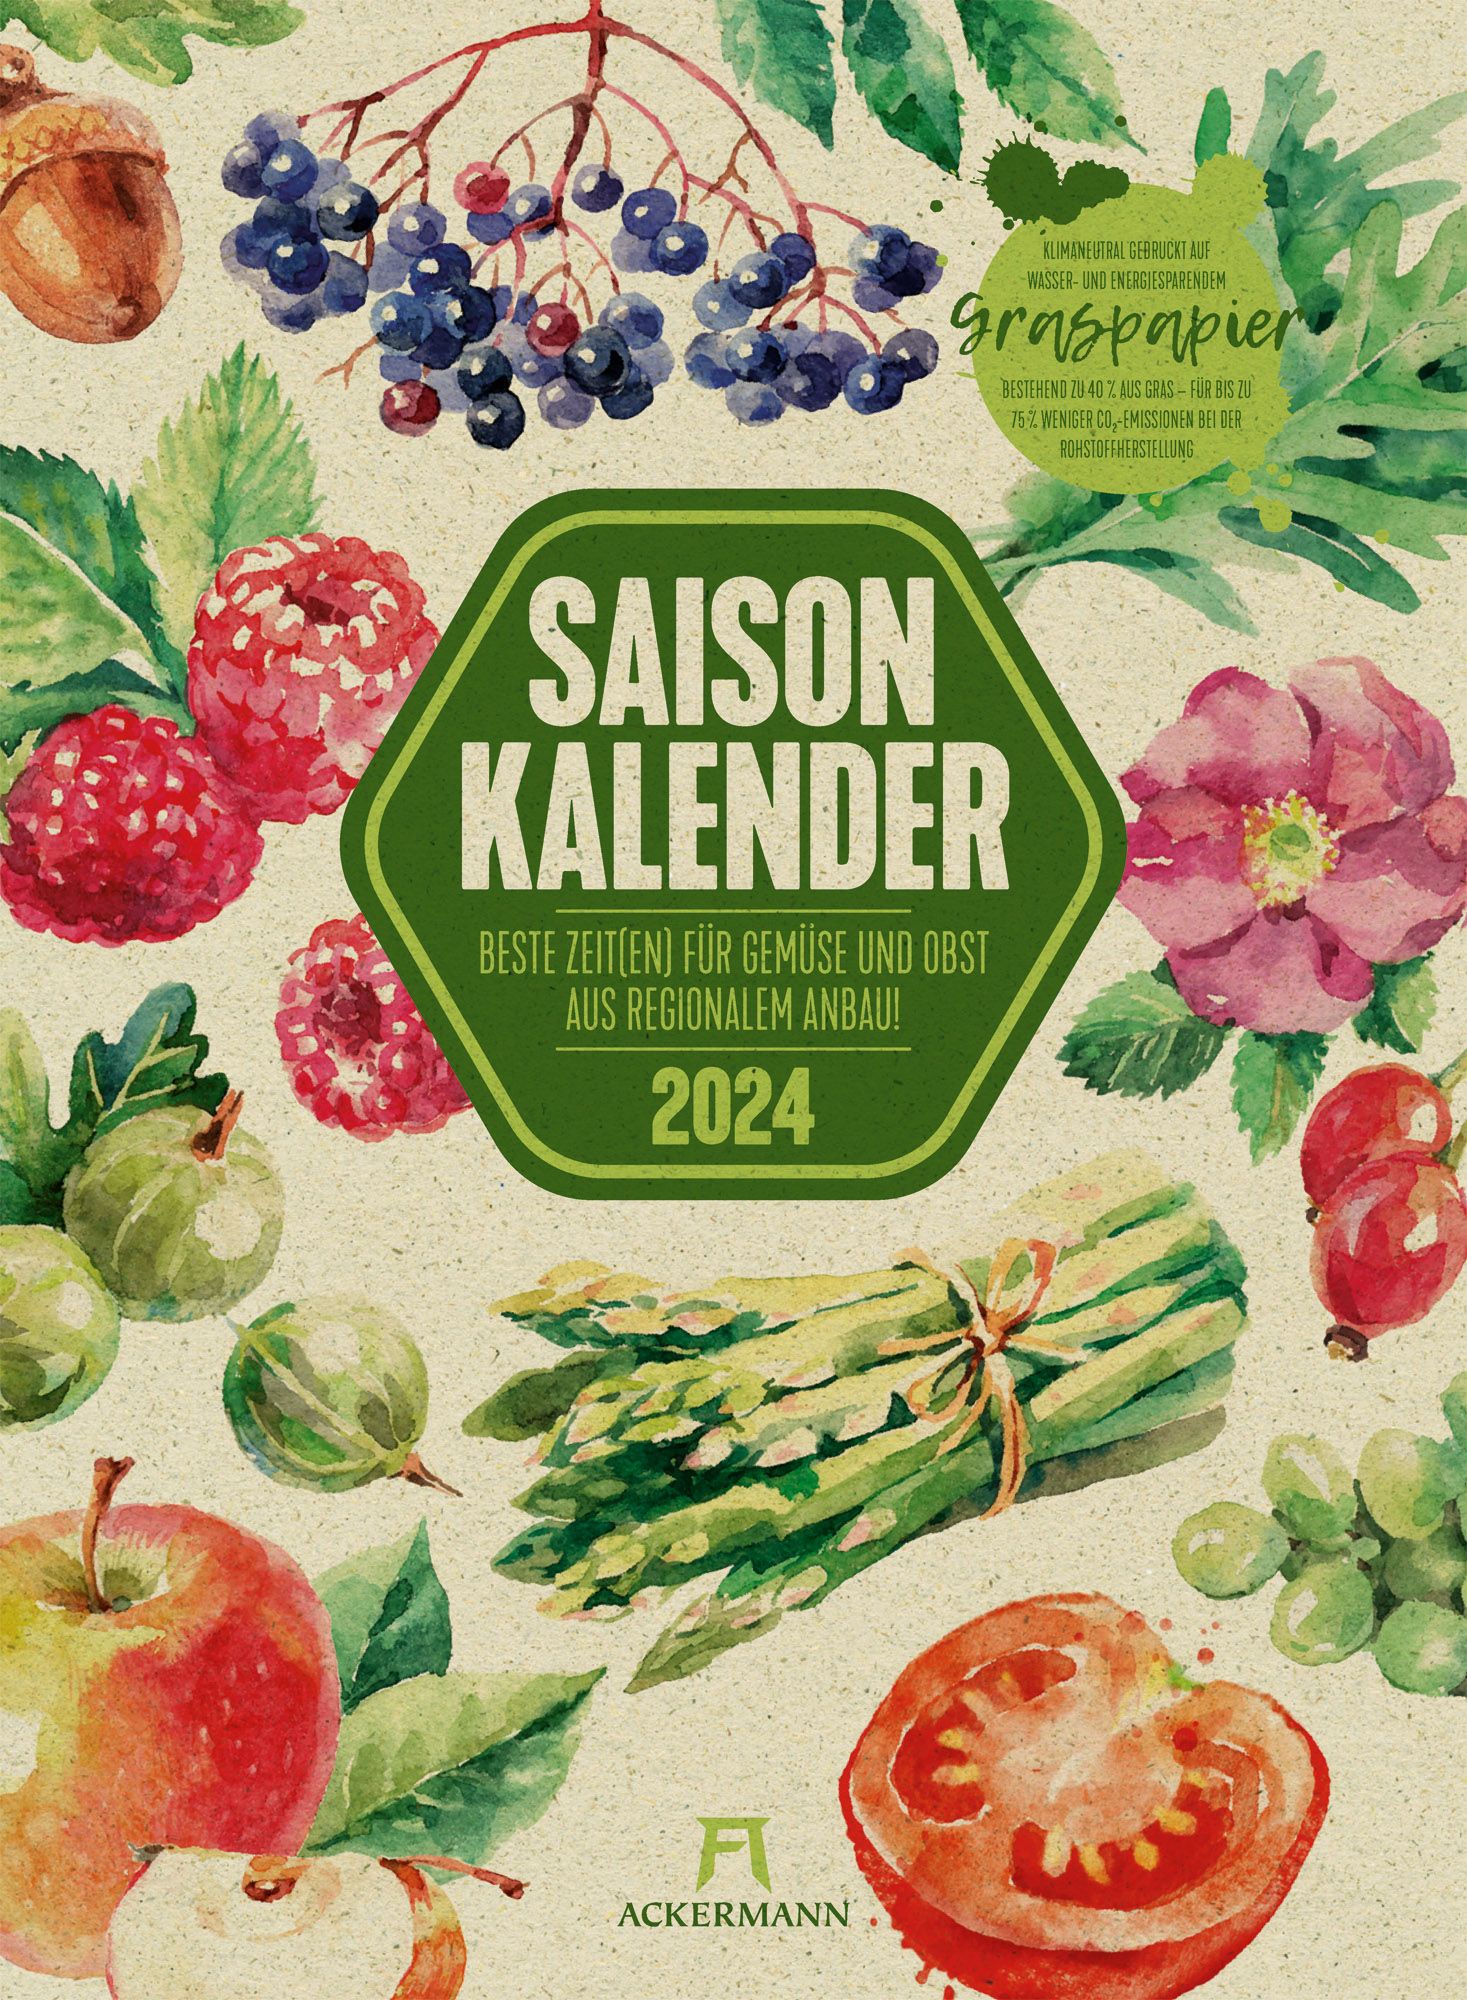 Saisonkalender - Obst - Graspapier-Kalender - 2024\' & \'Ackermann\' Gemüse